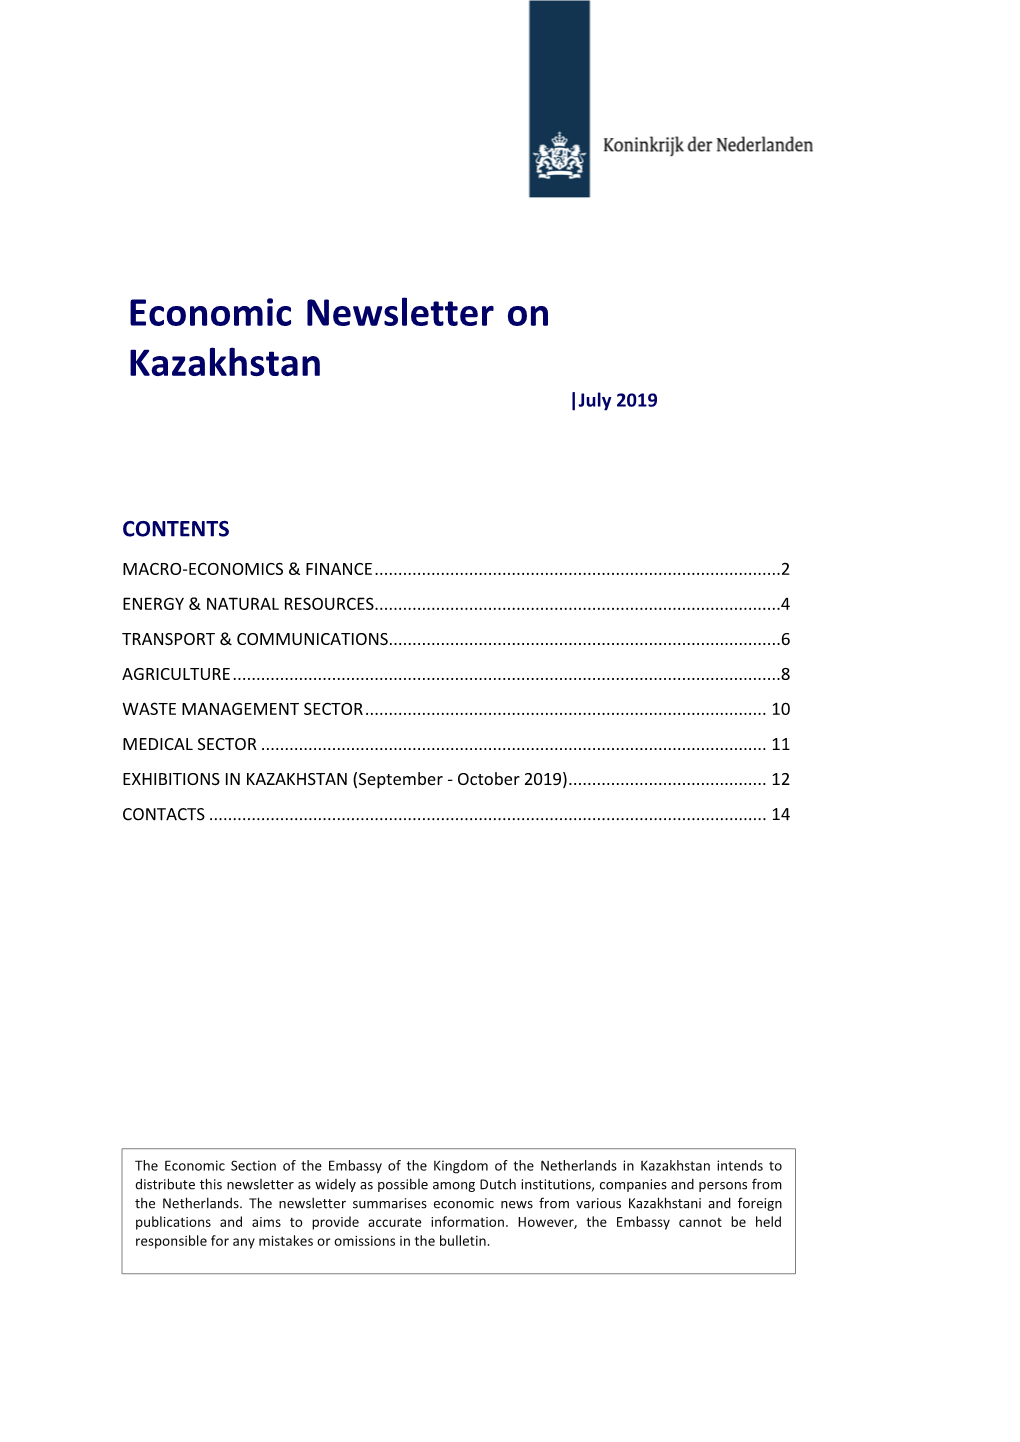 Economic Newsletter on Kazakhstan |July 2019